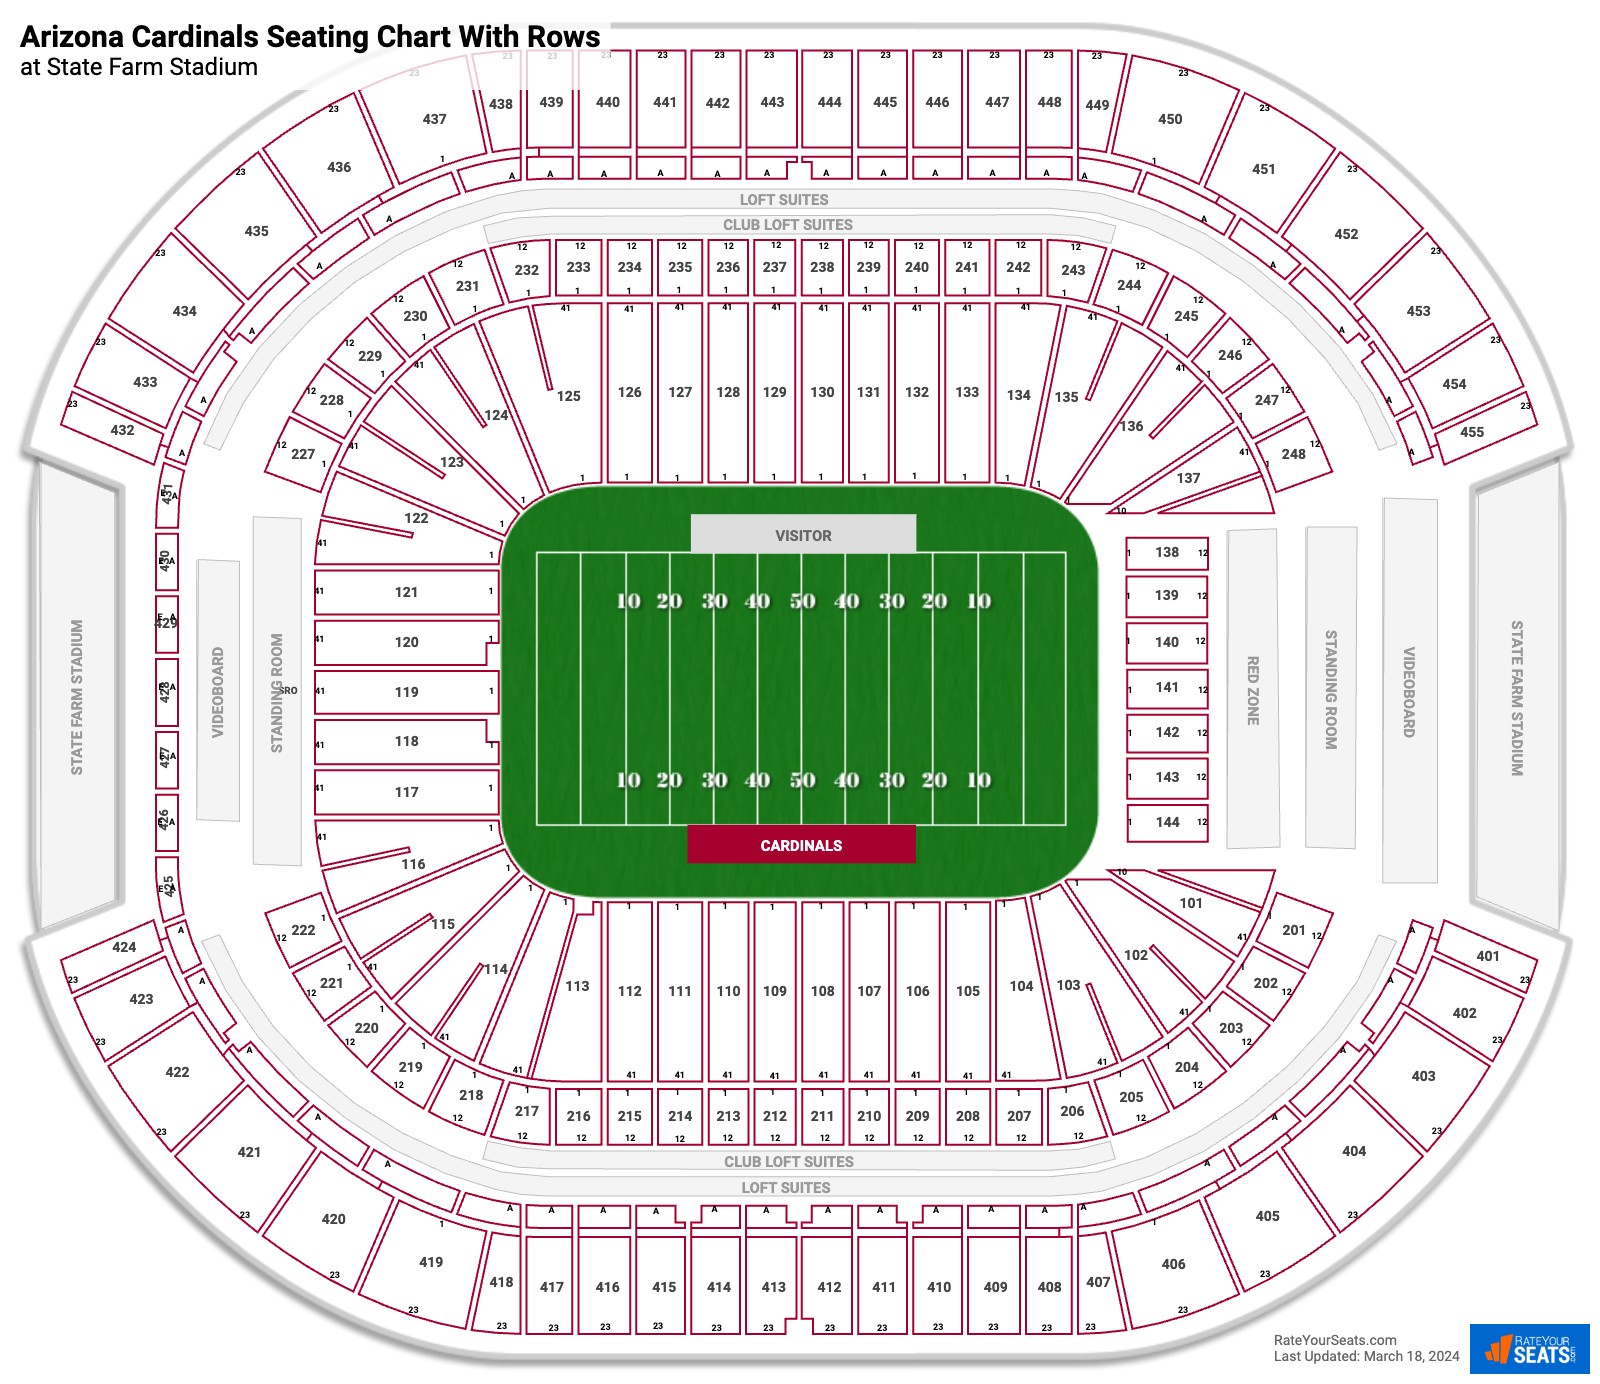 Arizona Cardinals Seating Chart With Rows At State Farm Stadium 